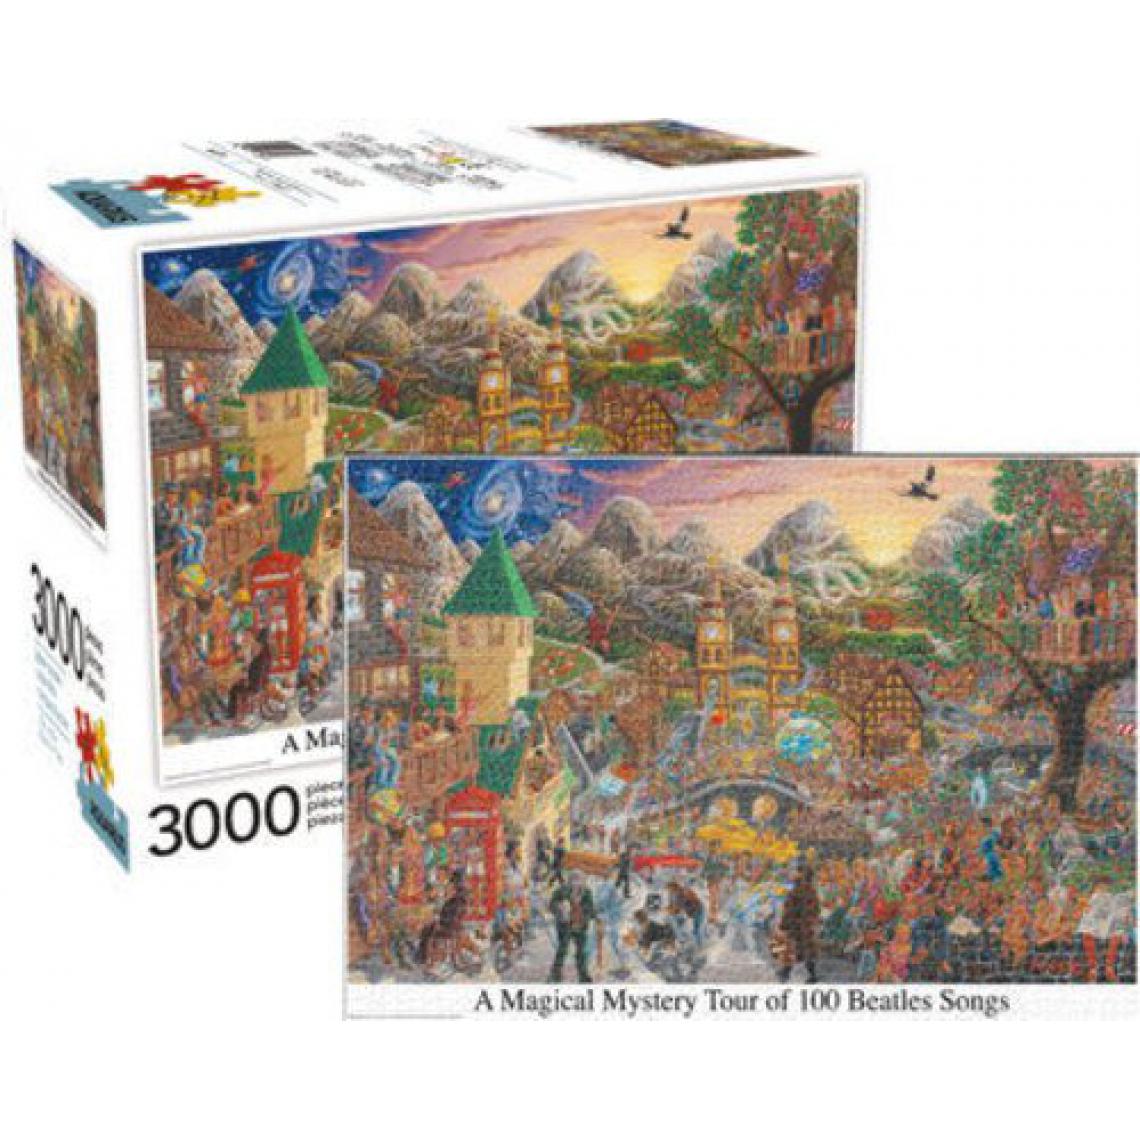 Aquarius - AQUARIUS Puzzle 3000 pieces A Magical Mystery Tour of 100 Beatles Songs - 68504 - Accessoires Puzzles